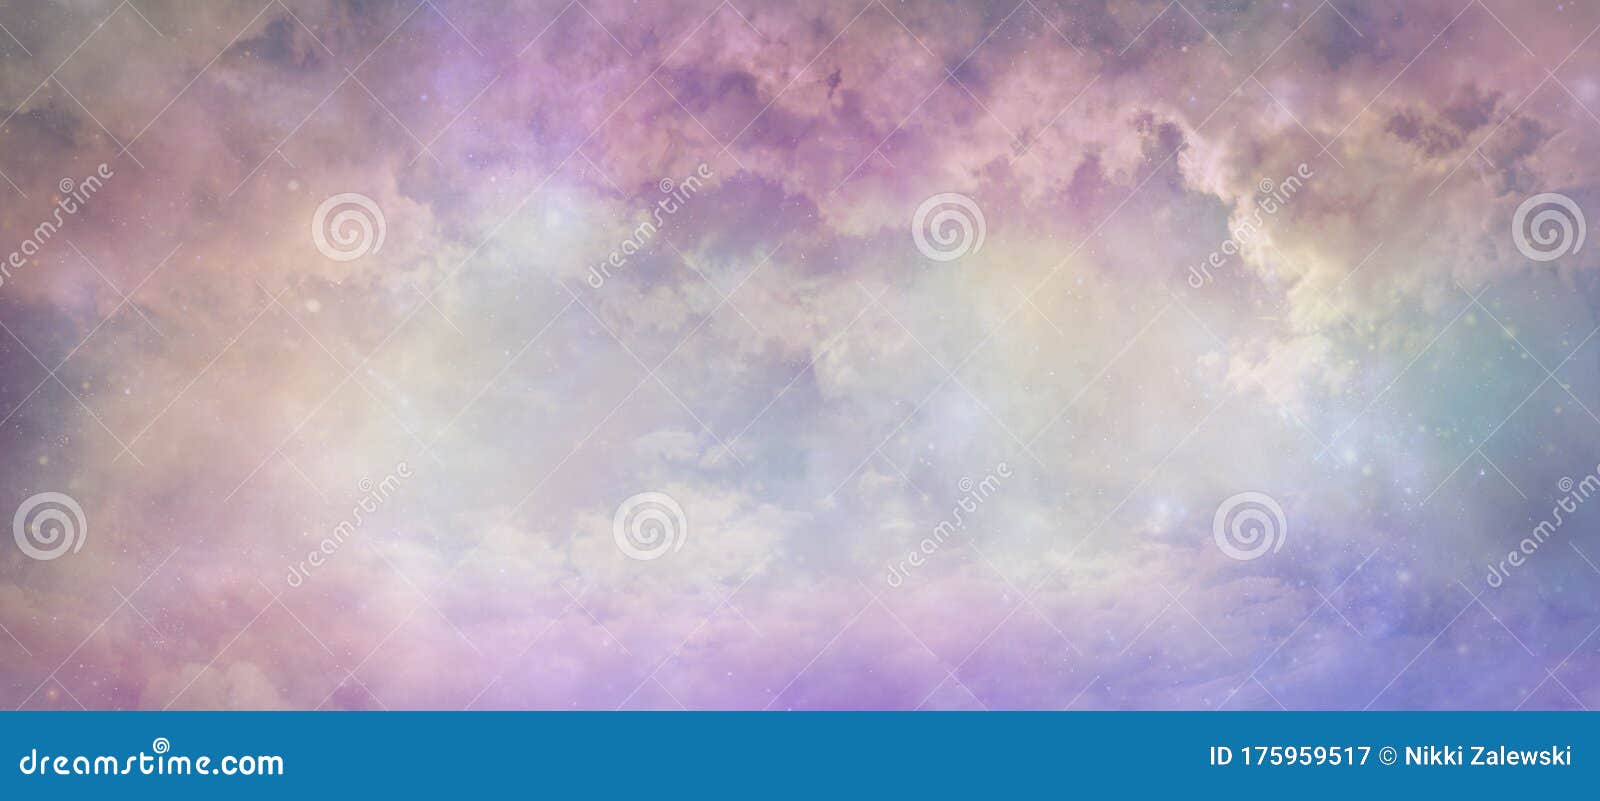 heavens above celestial concept background banner